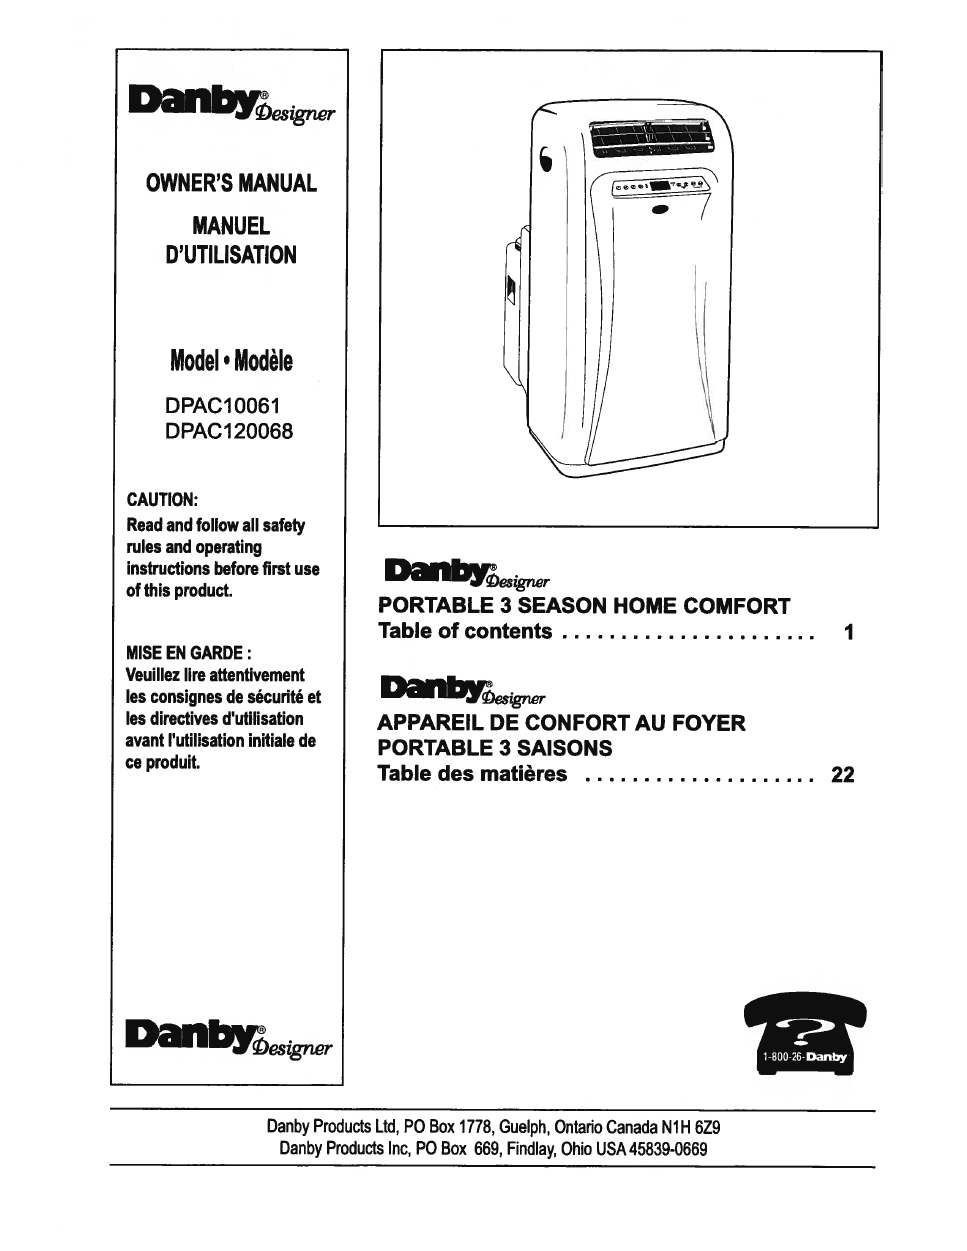 Danby premiere air conditioner manual